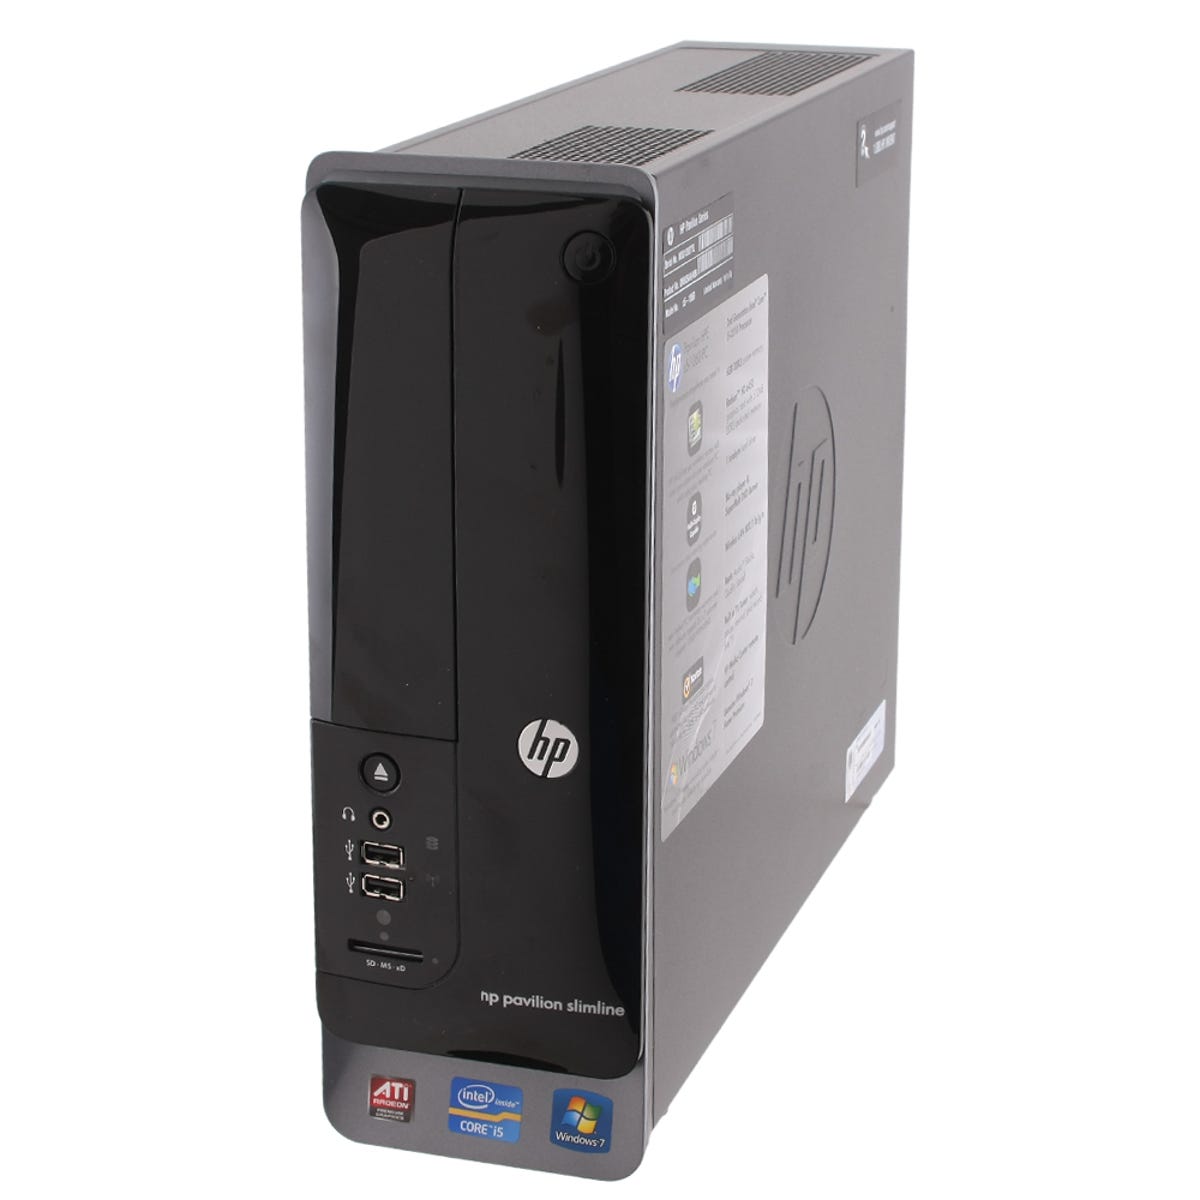 HP Pavilion s5-1060 - Slimline - Core i5 2310 2.9 GHz - Monitor